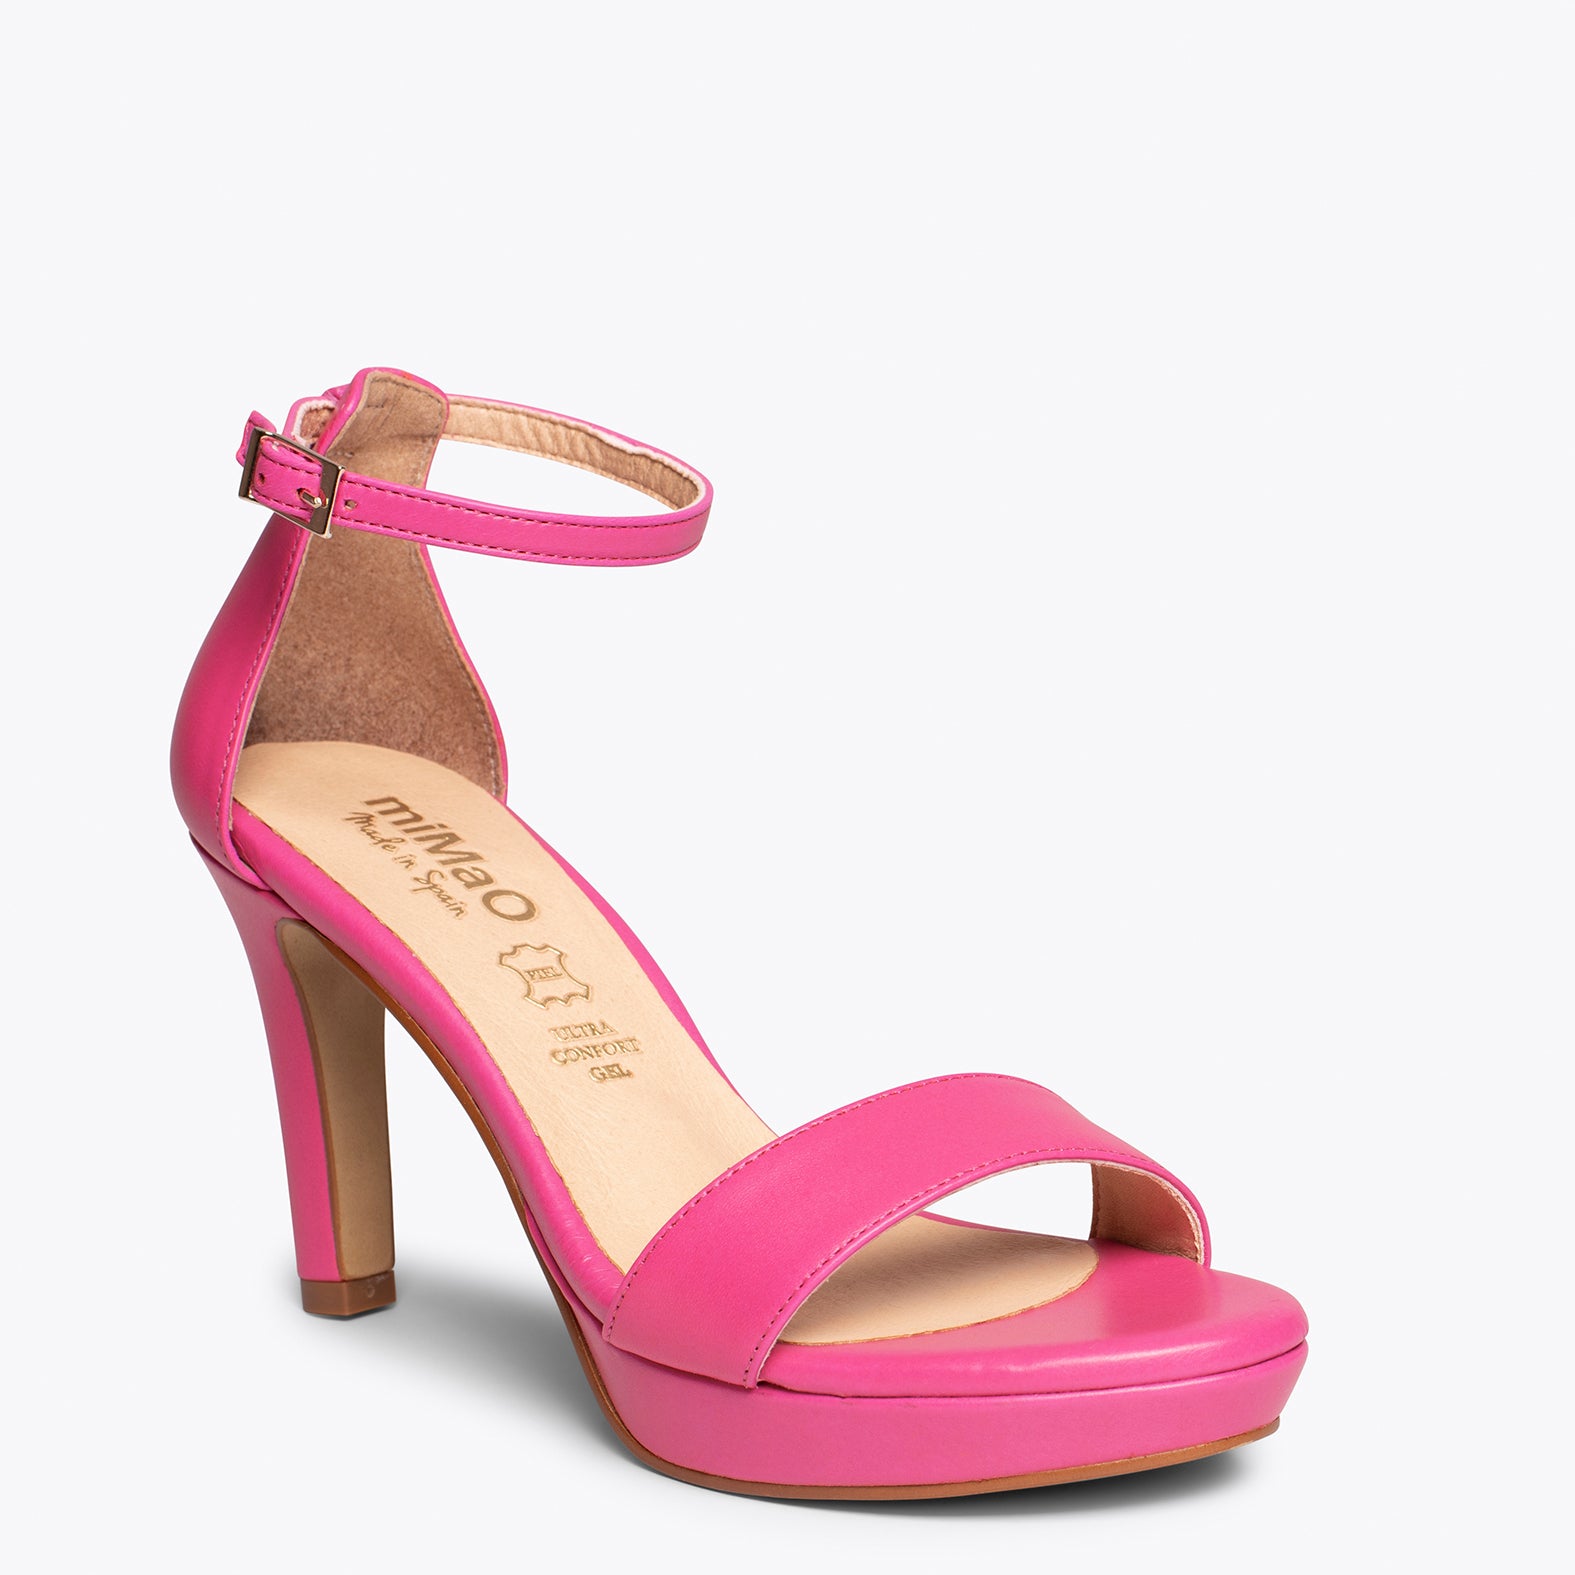 PARTY – FUCHSIA high heel sandals with platform